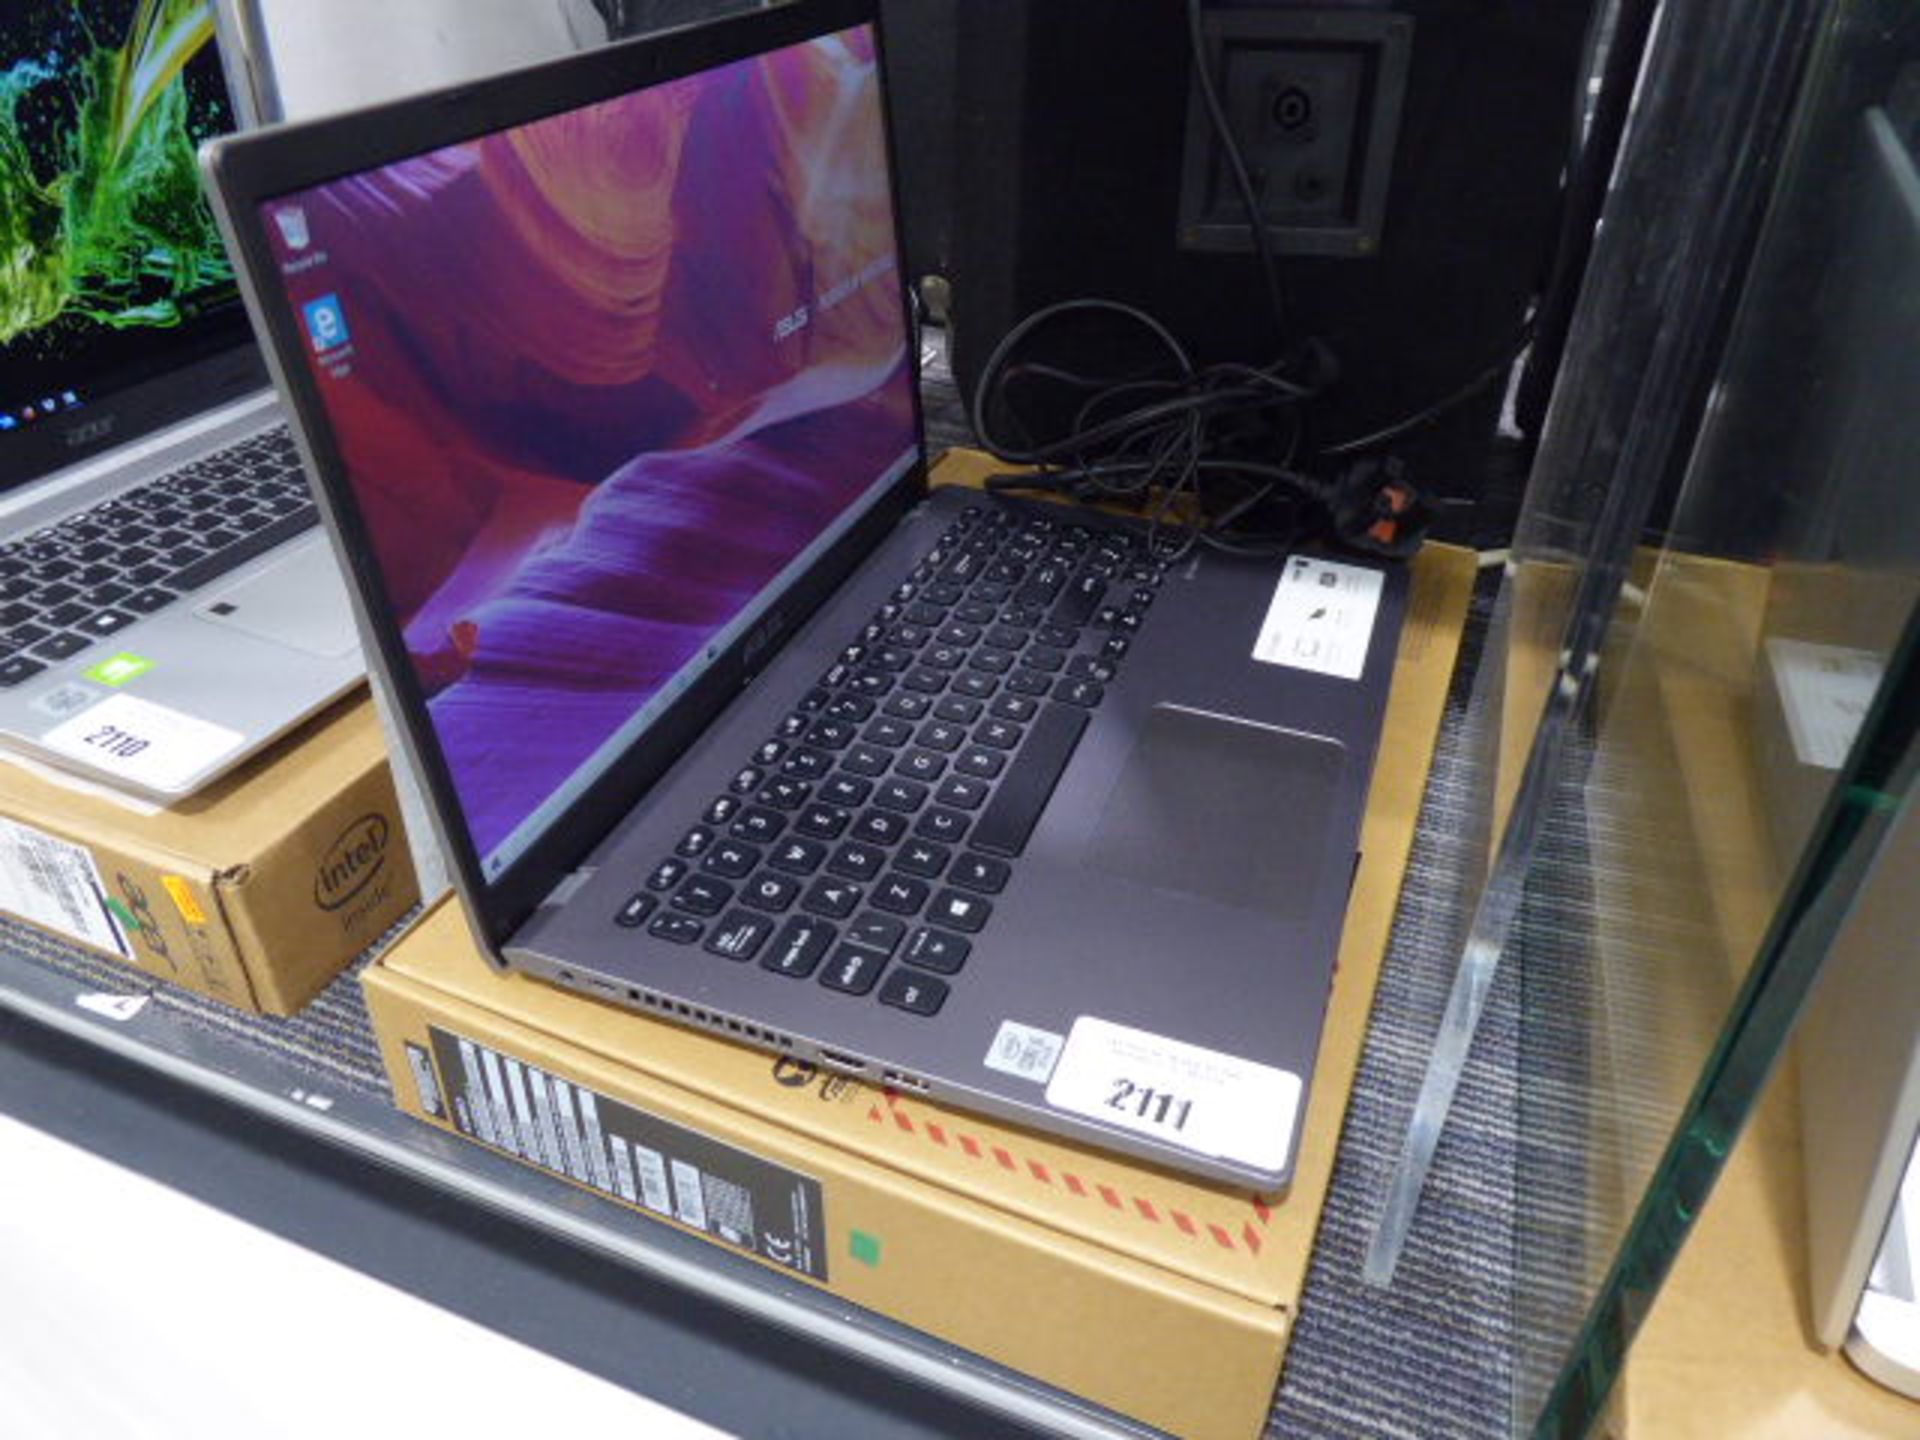 Asus X509J laptop, Intel Core i5 10th Gen. processor, 8Gb RAM, 256Gb SSD, Windows 10 installed, with